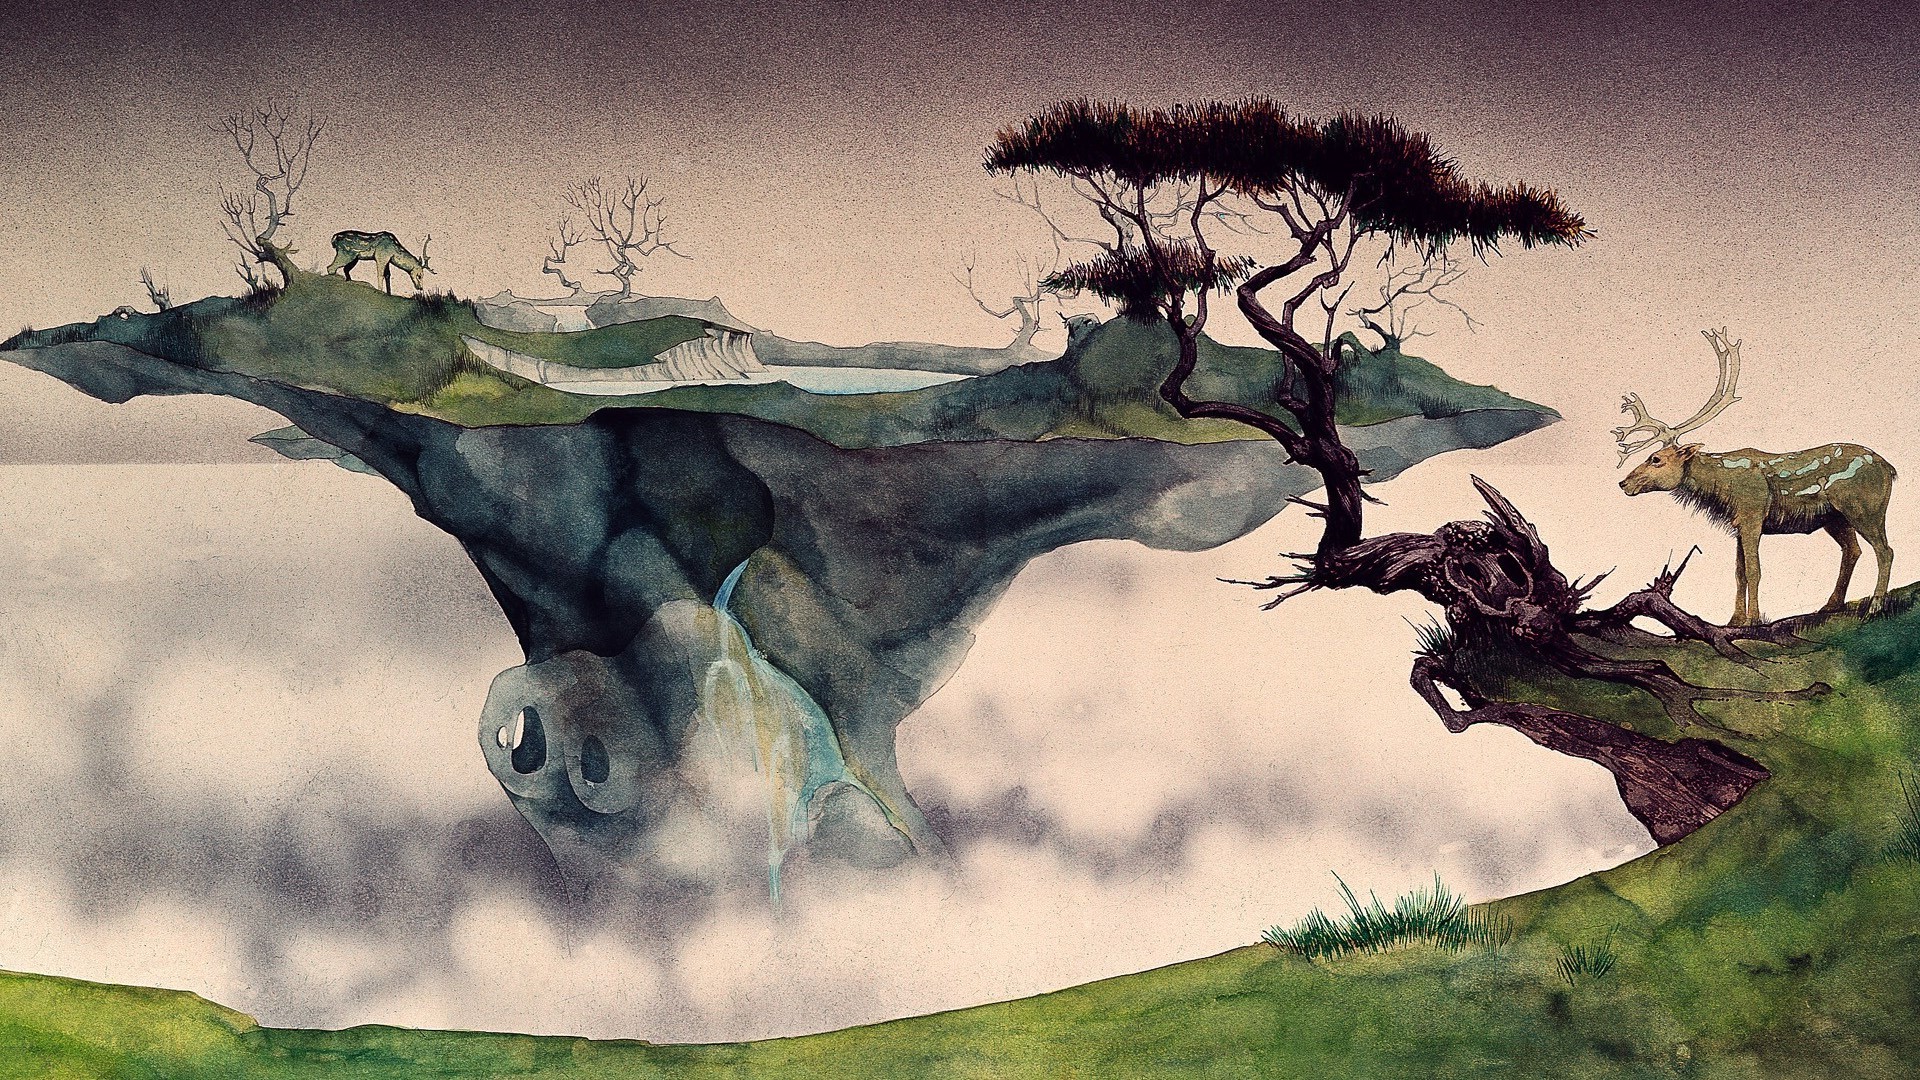 fantasy Art, Floating Island, Nature, Animals, Deer, Trees, Mist, Lake, Painting, Watercolor, Ink, Roger Dean Wallpaper